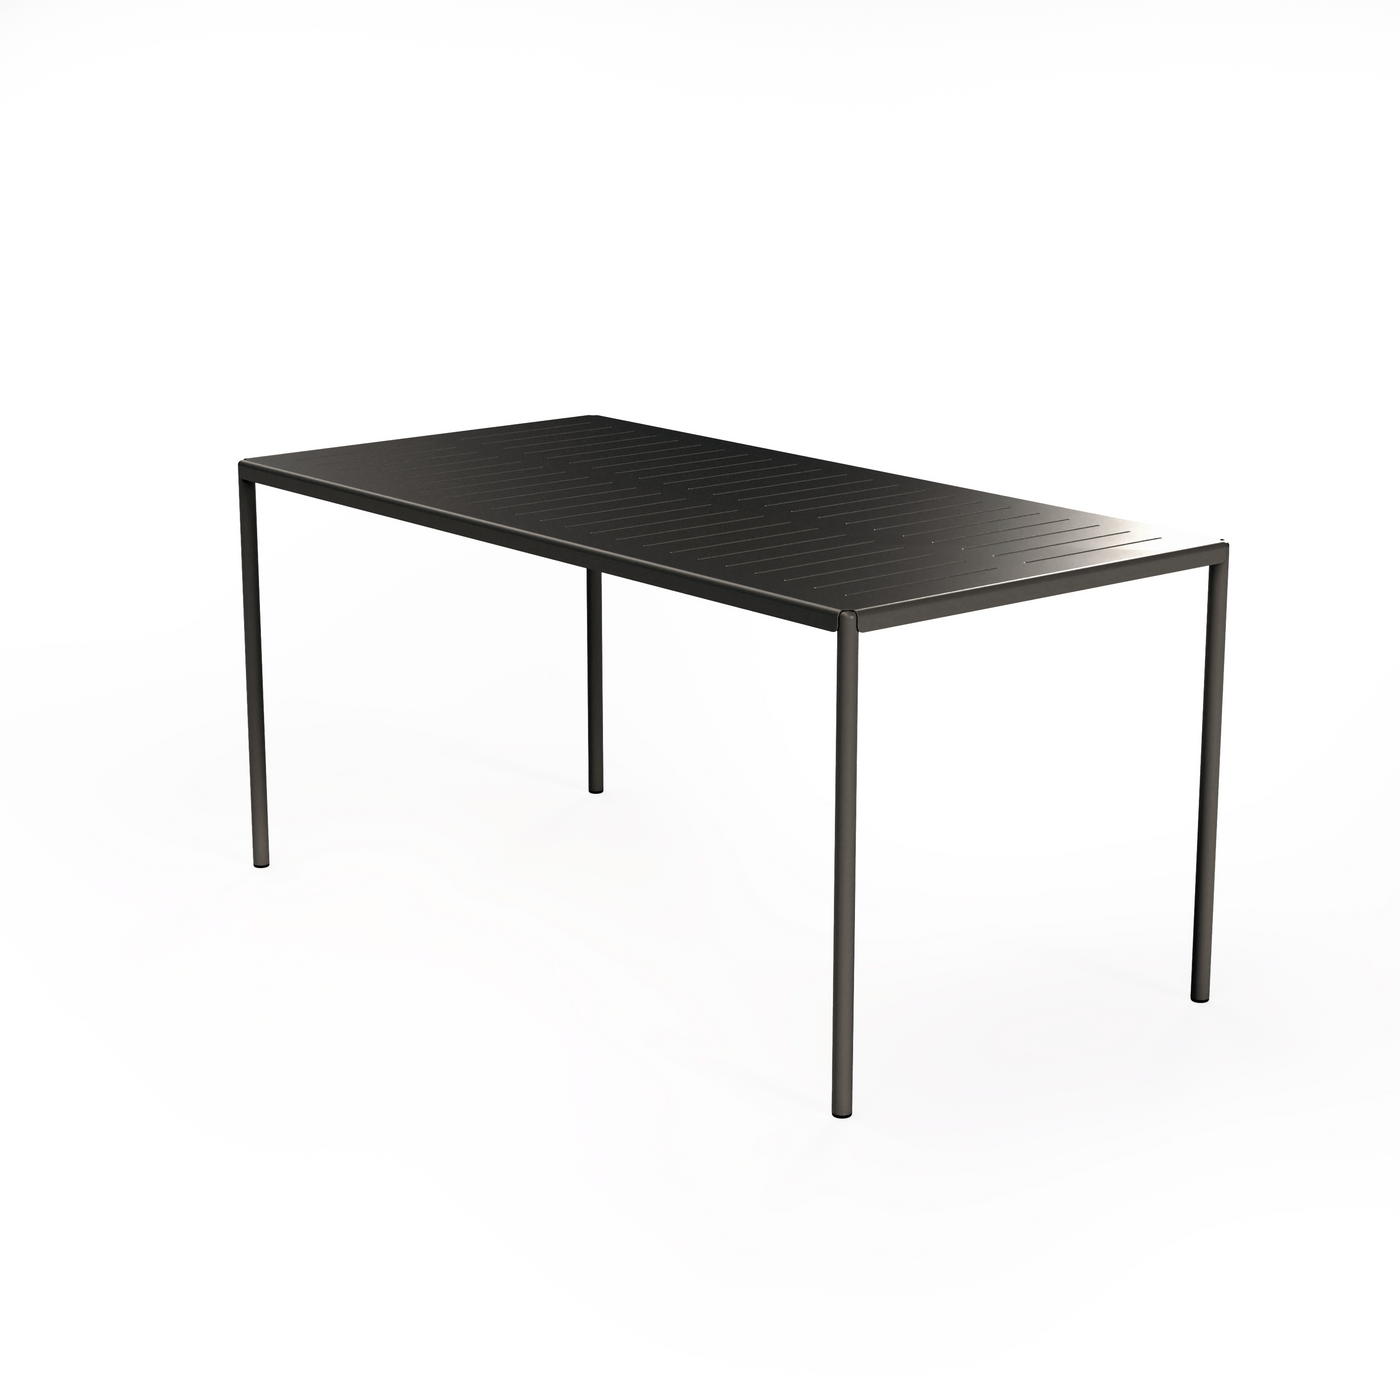 Frame Metal Garden Table, 6 Seater, Black